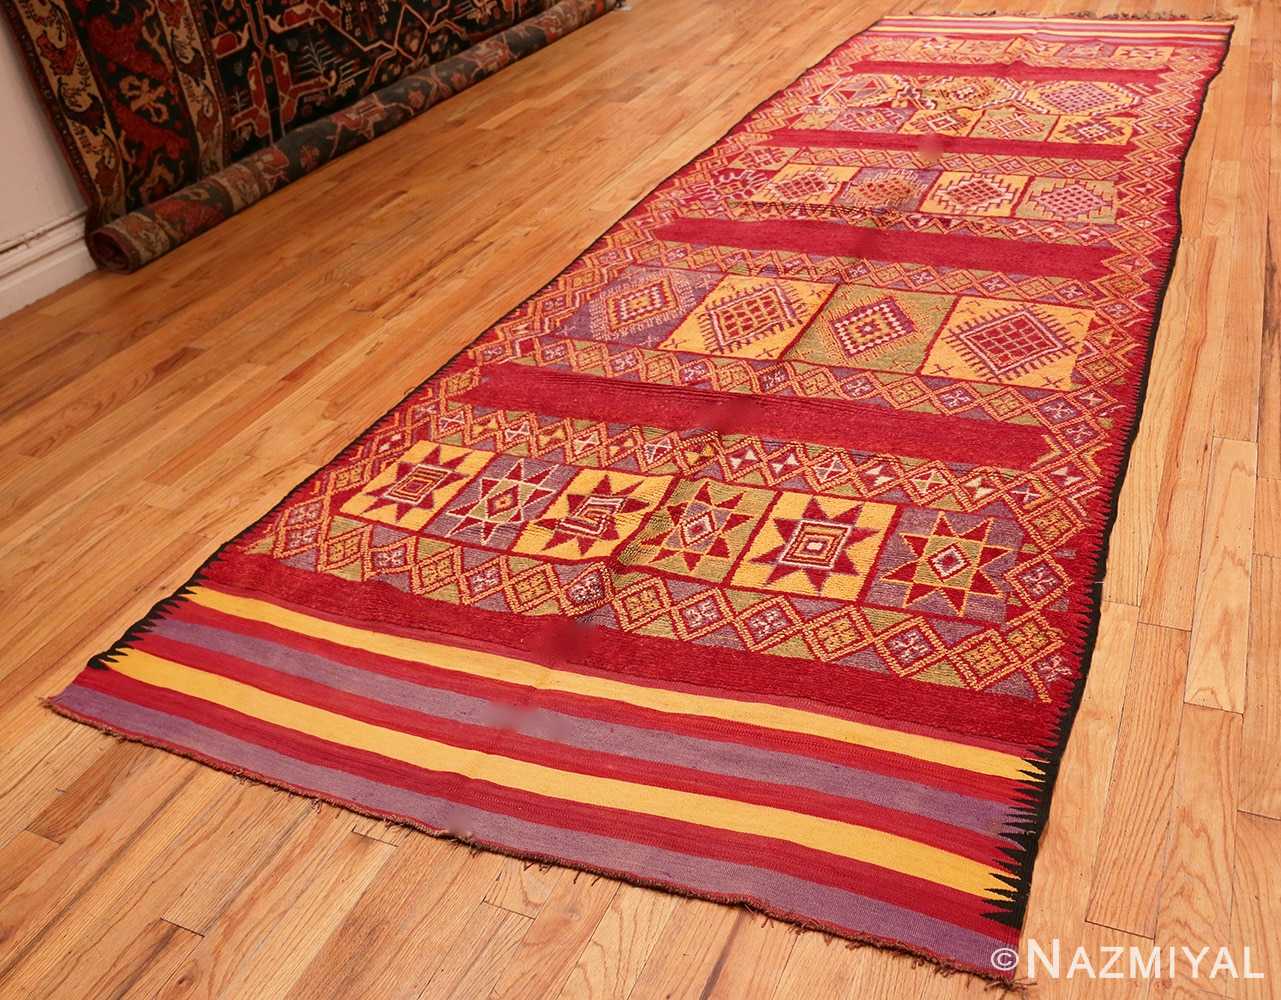 Full Vintage Moroccan rug 45751 by Nazmiyal